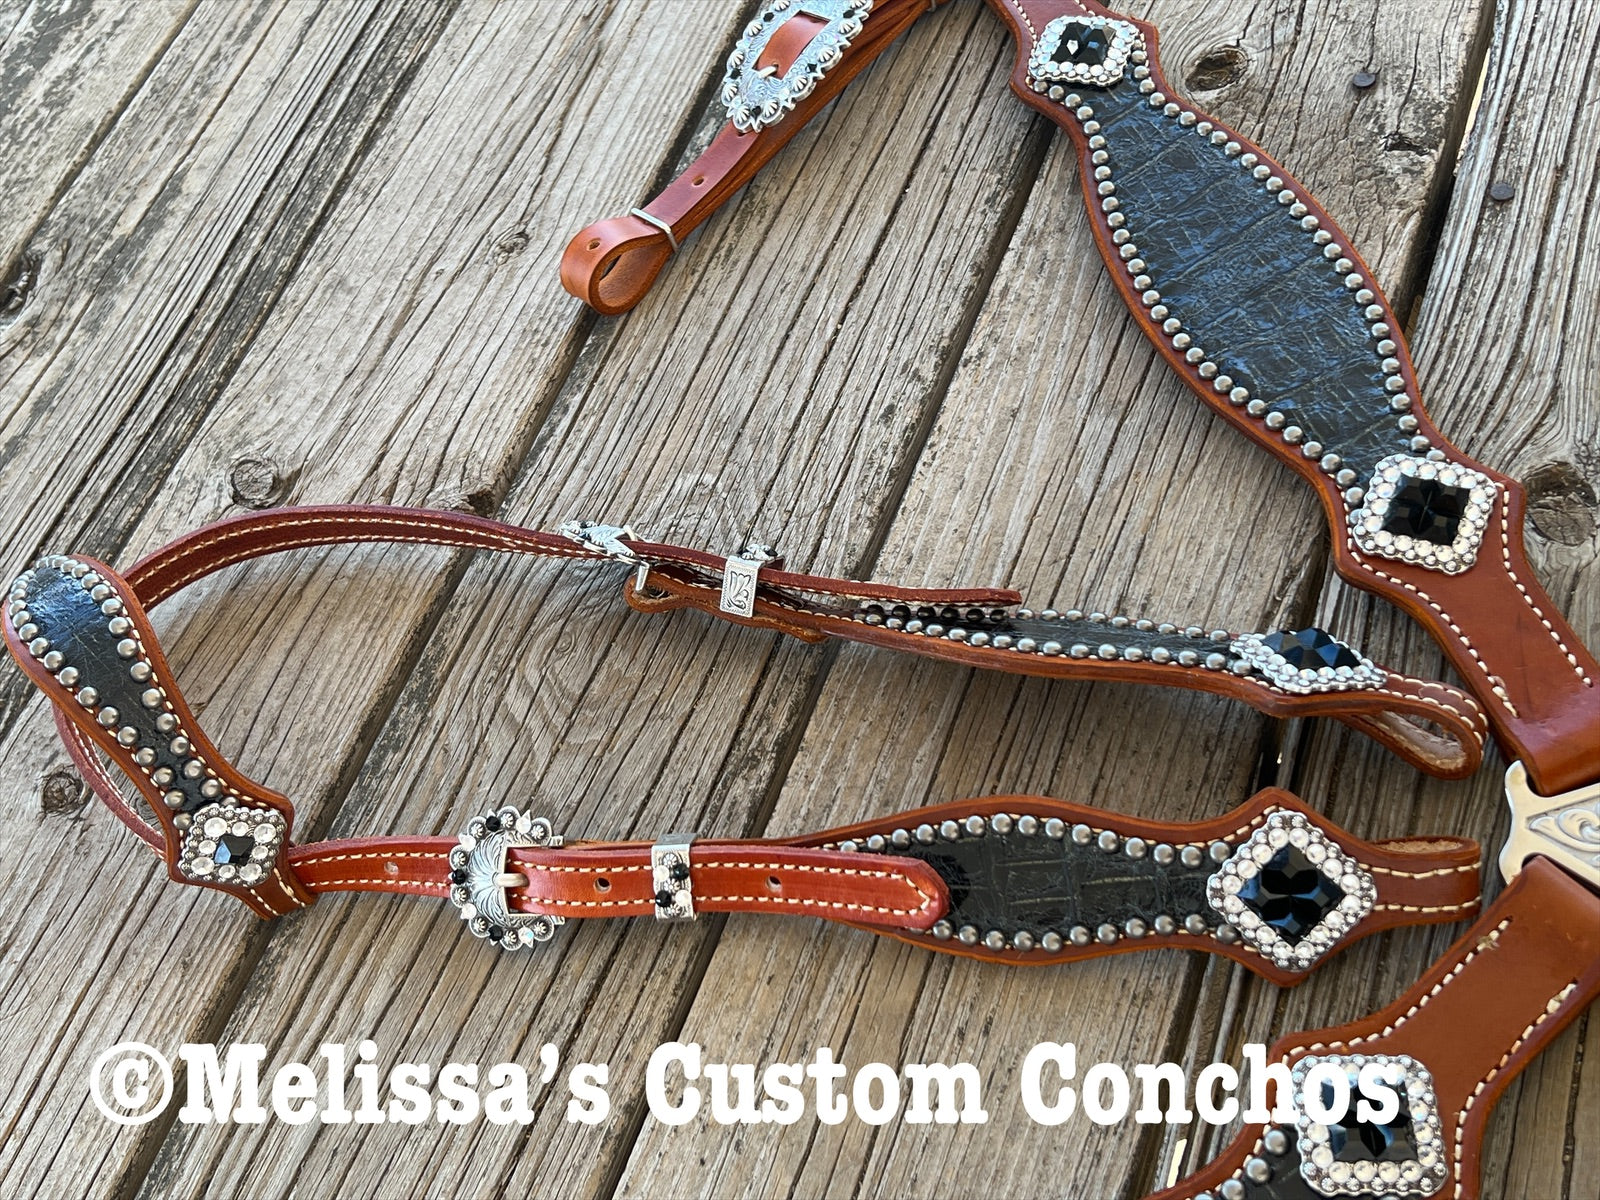 Gray Bronc Halter – Melissa's Custom Conchos